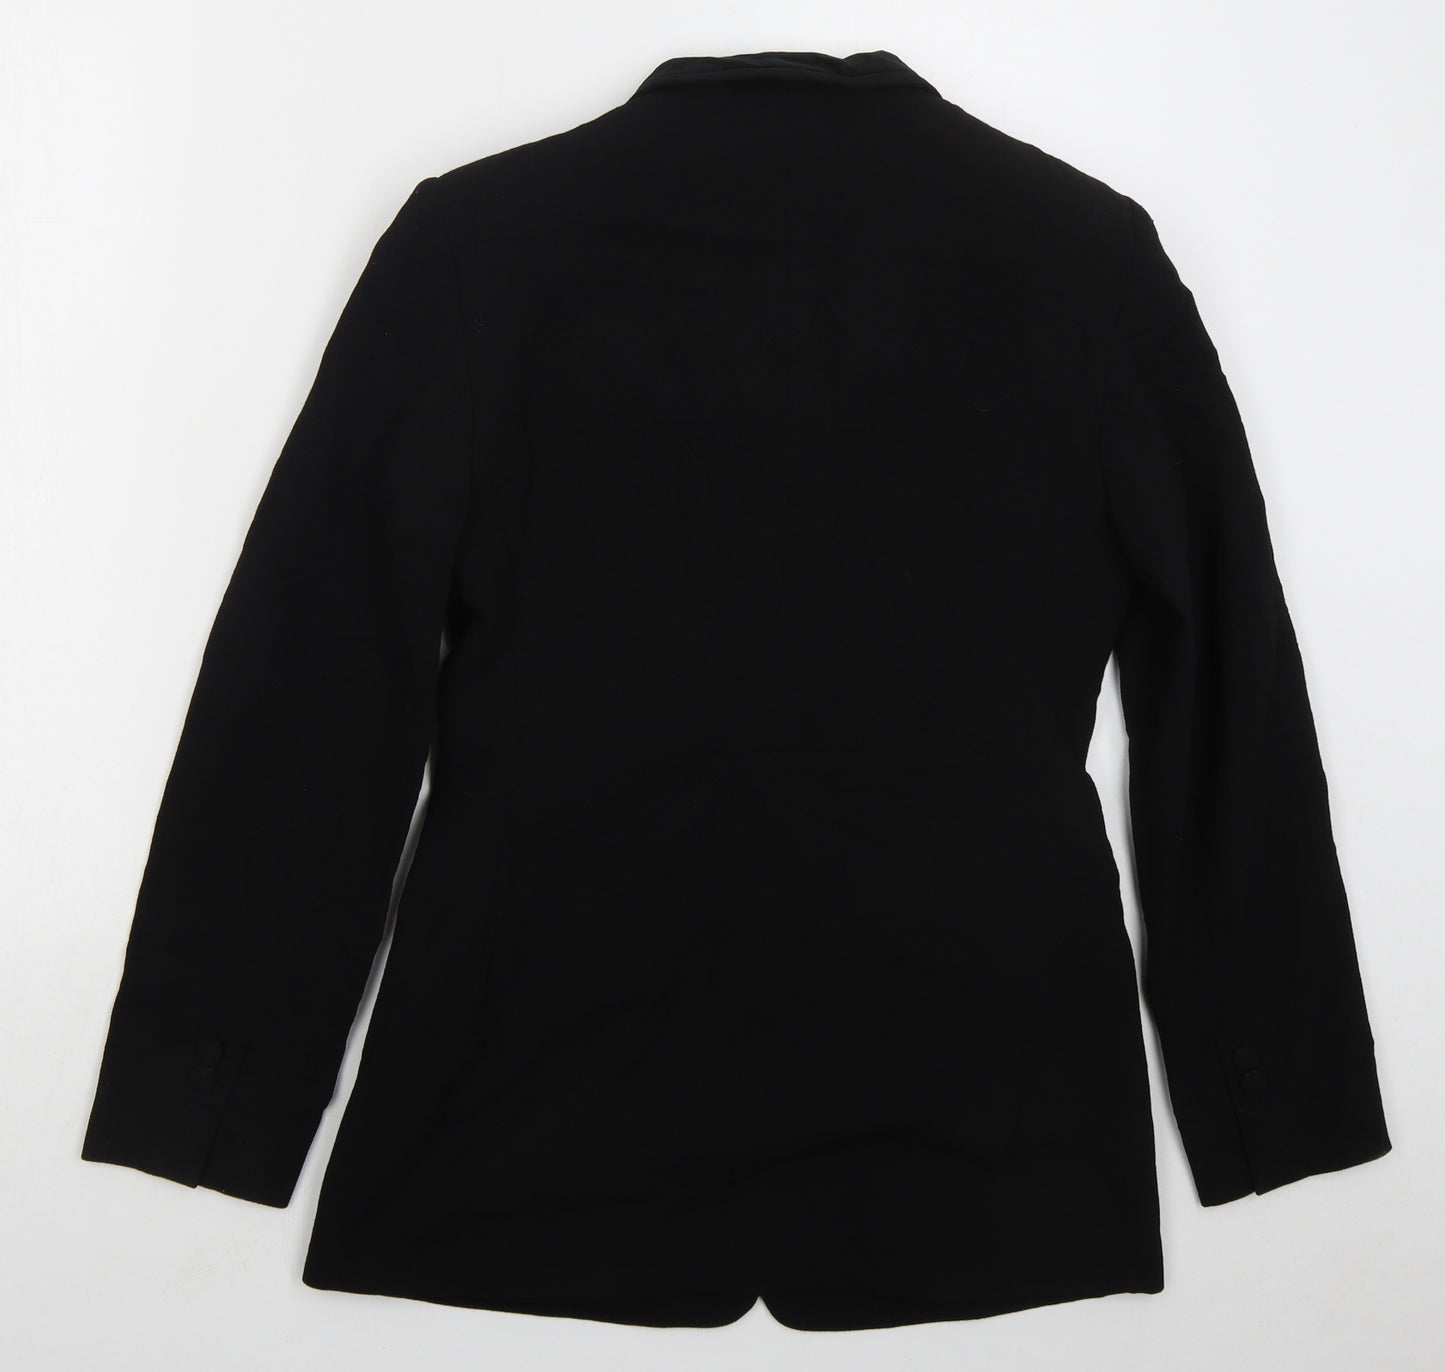 Liz Claiborne Womens Black Wool Jacket Suit Jacket Size 6